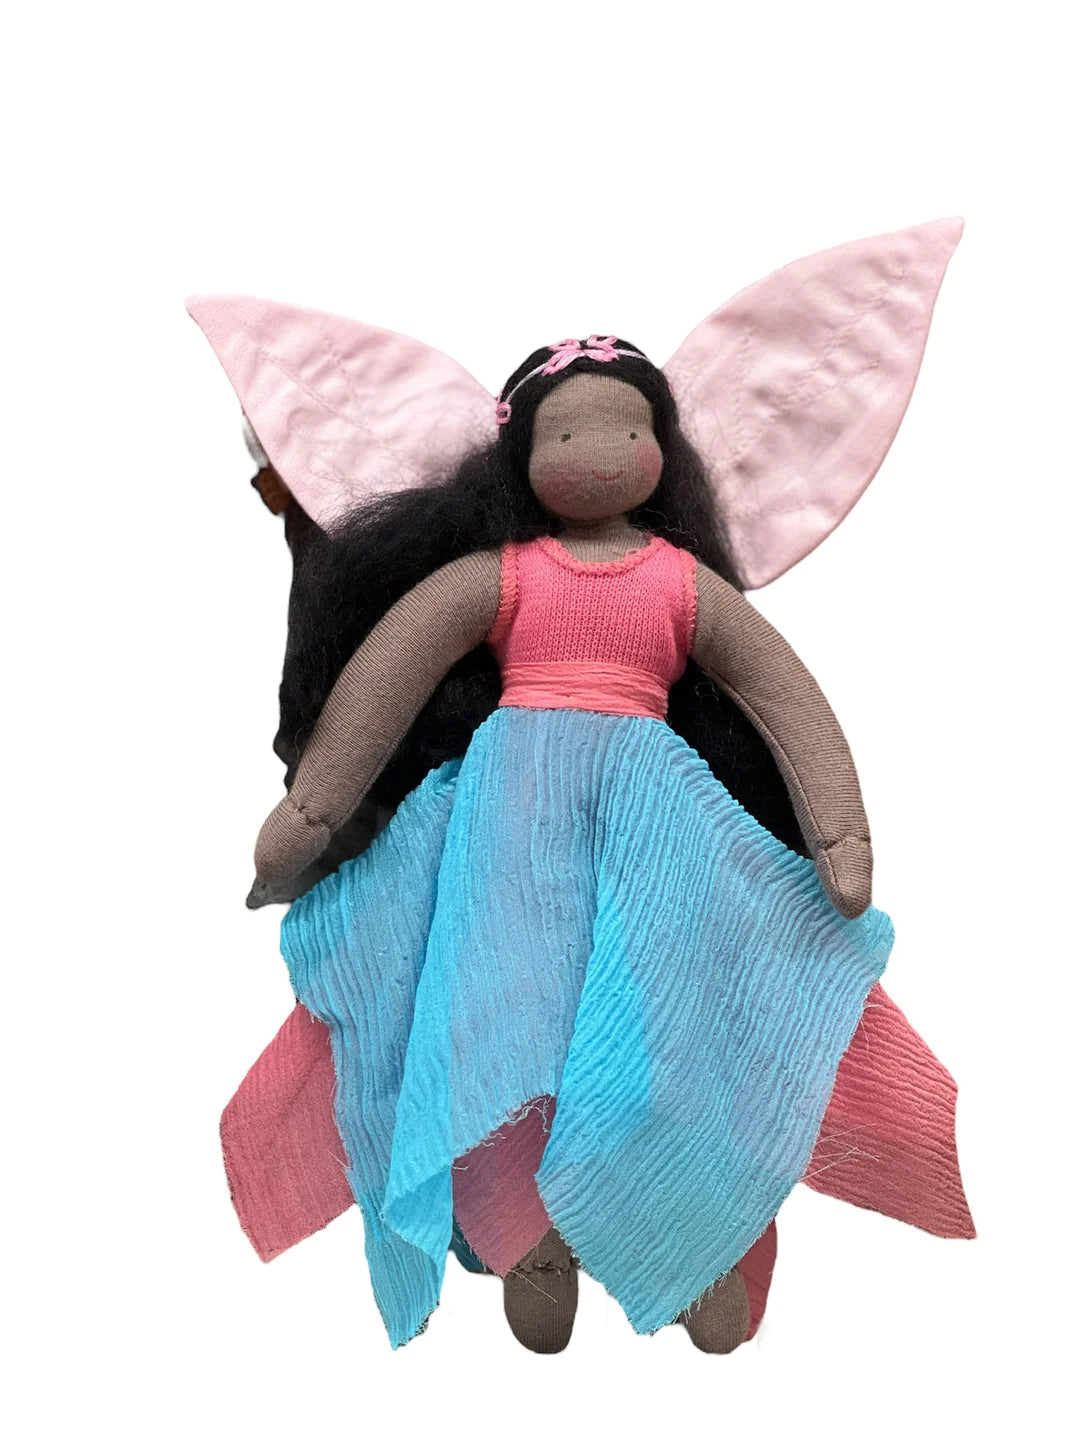 Evi Doll Kerchief Fairy, Dark Skin